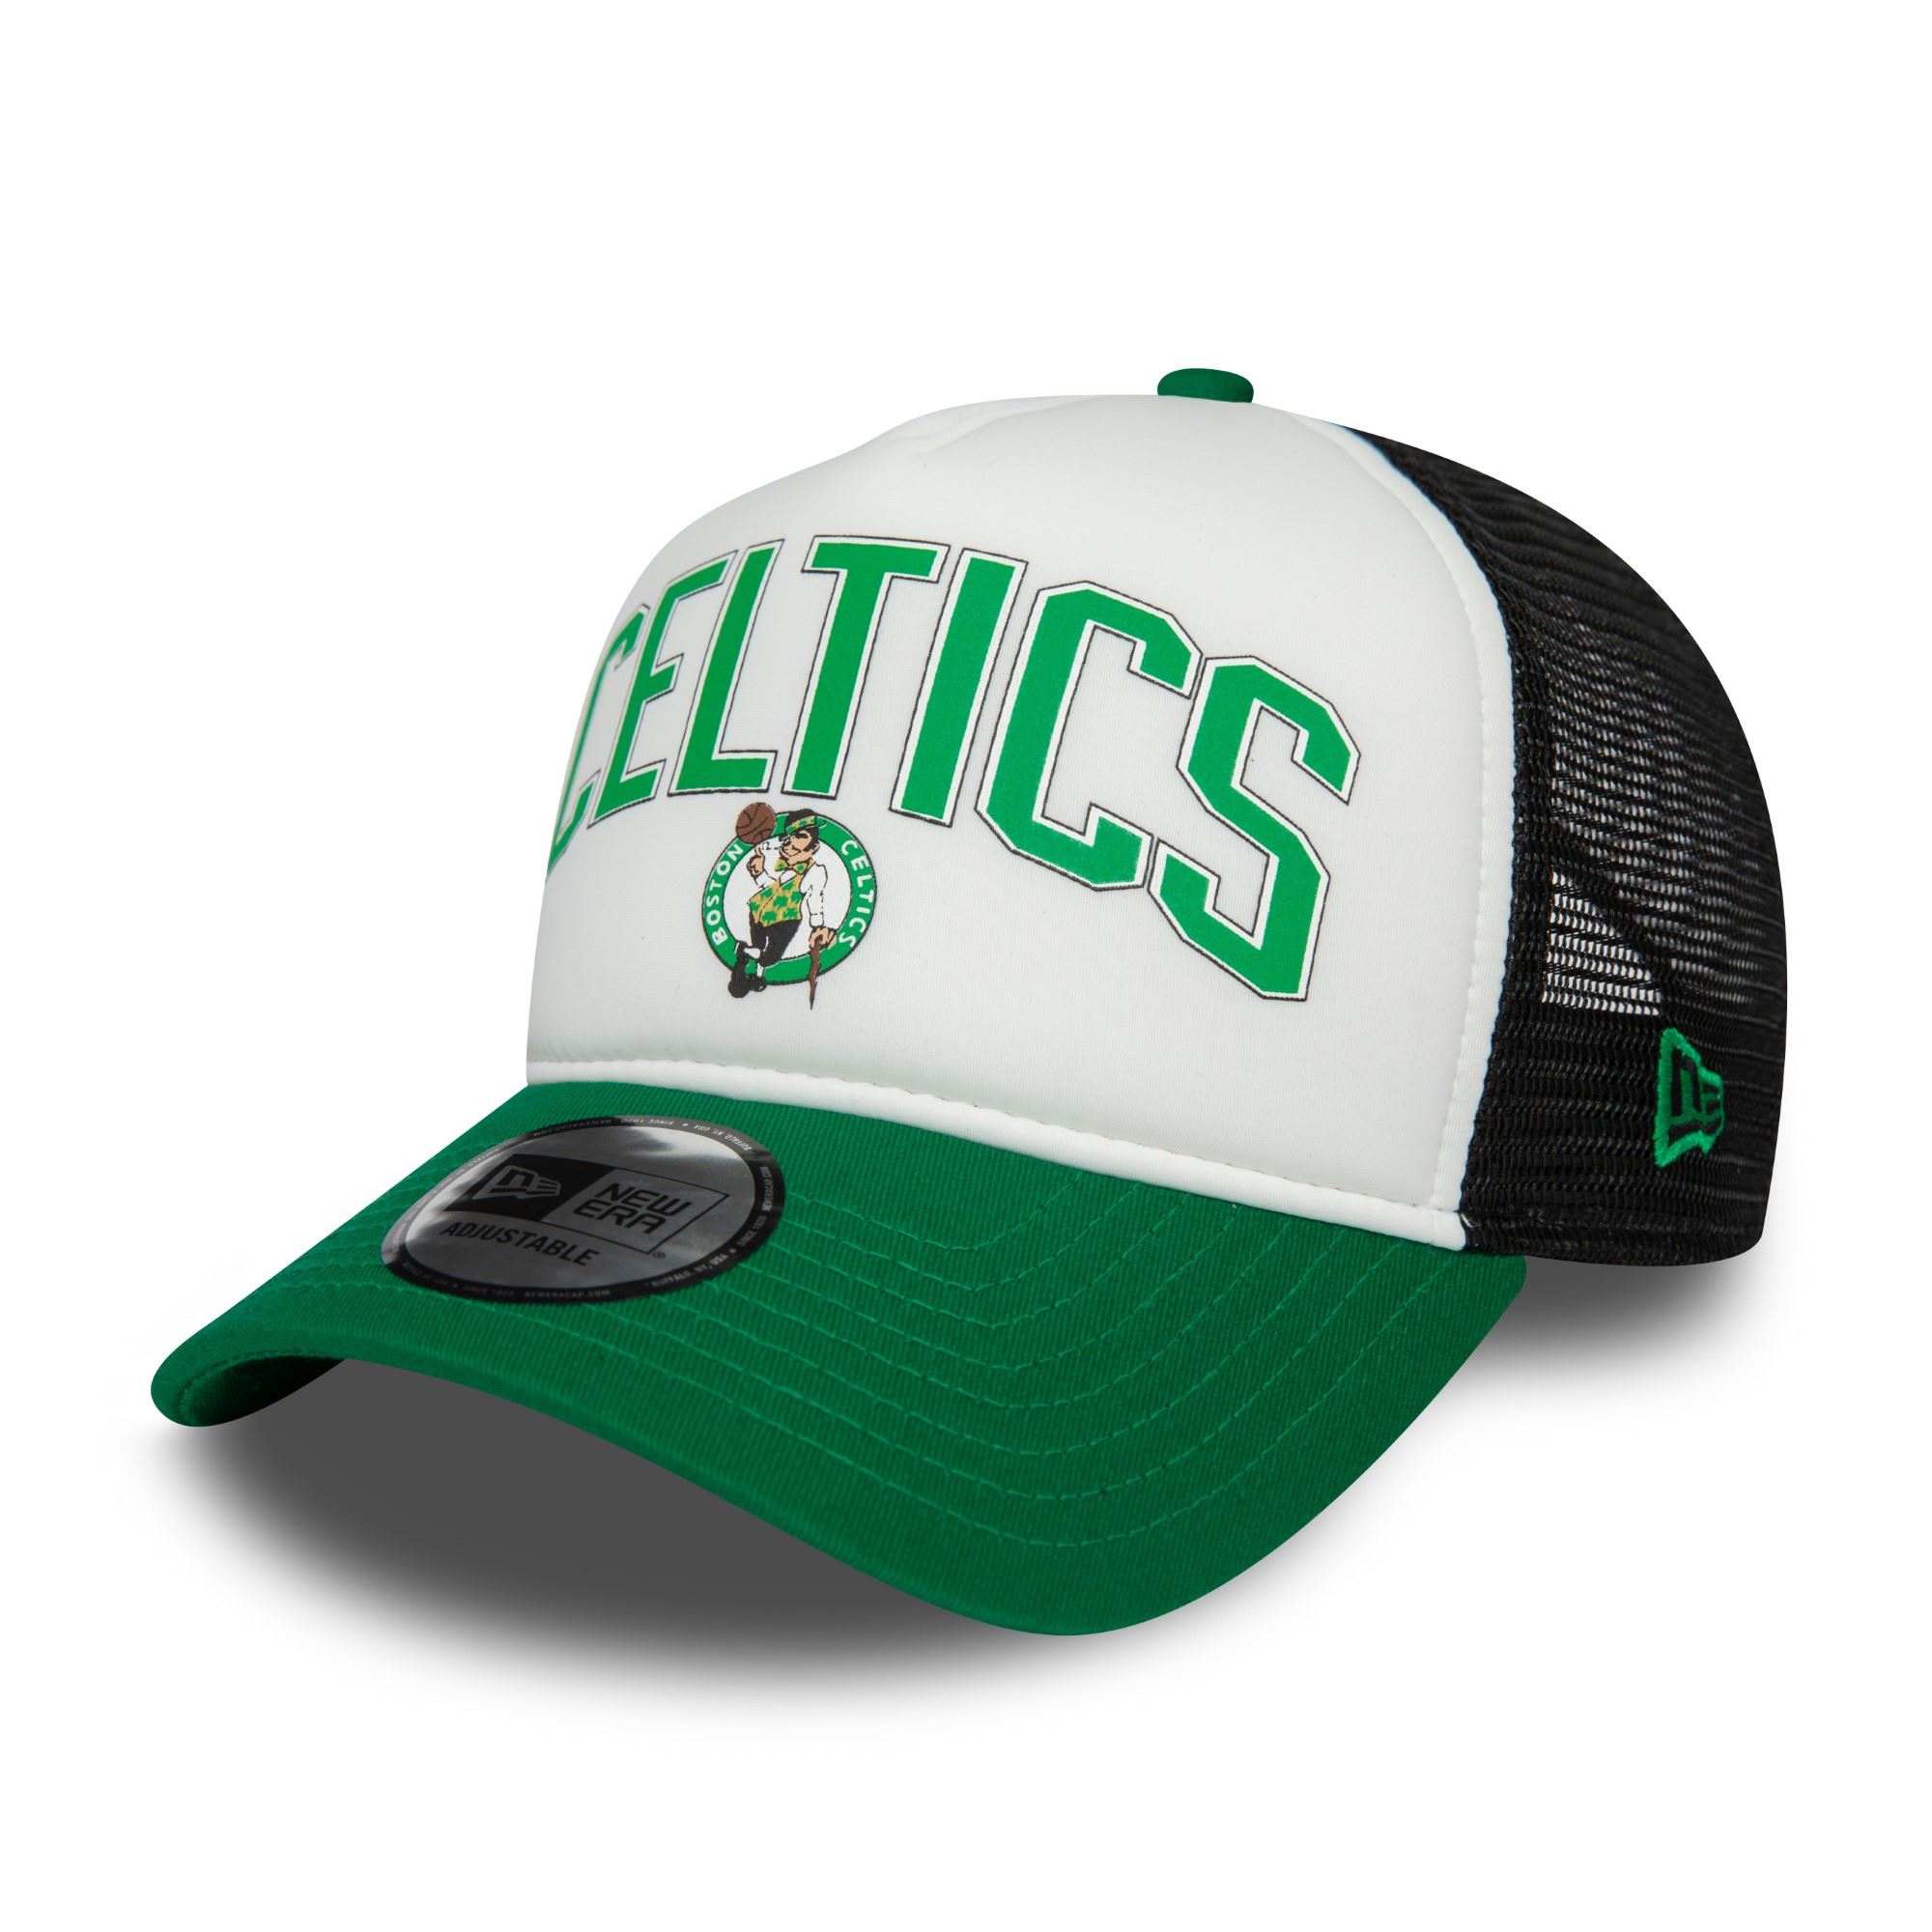 Boston Celtics NBA Retro White Black Green A-Frame Adjustable Trucker Cap New Era